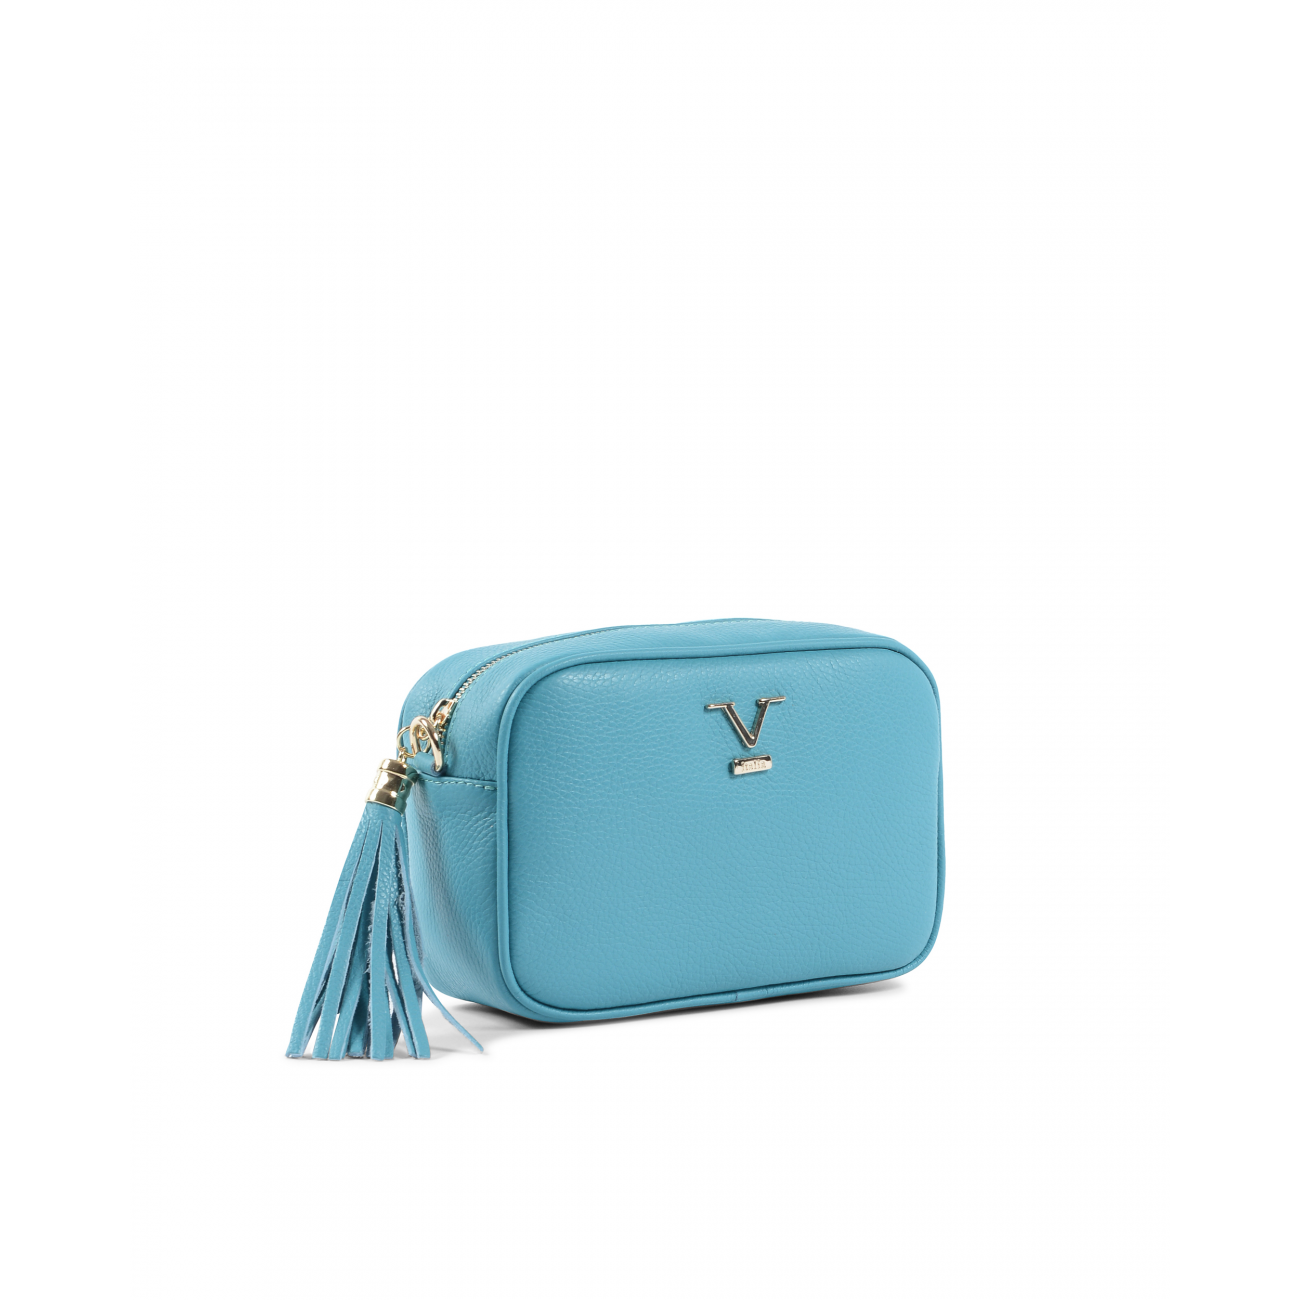 19V69 Italia Womens Handbag Light Blue 10730 DOLLARO TURCHESE